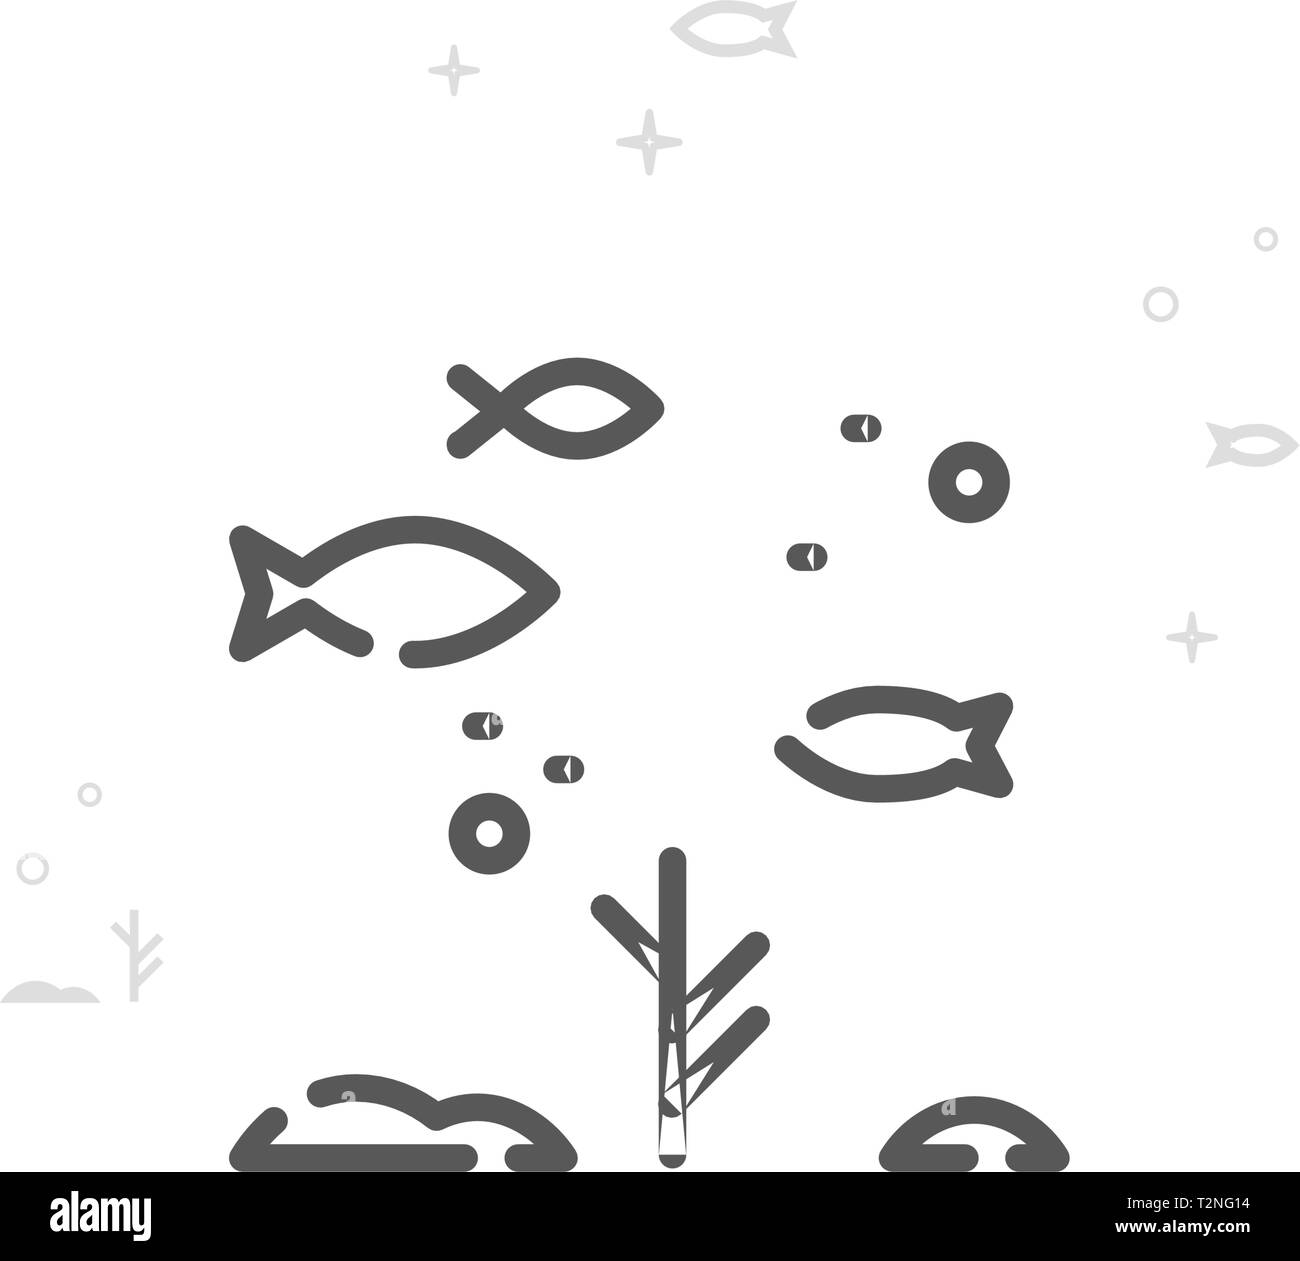 School of Fish Vector Line Icon. Marine Life, Sea Creatures Symbol, Pictogram, Sign. Light Abstract Geometric Background. Editable Stroke. Stock Vector